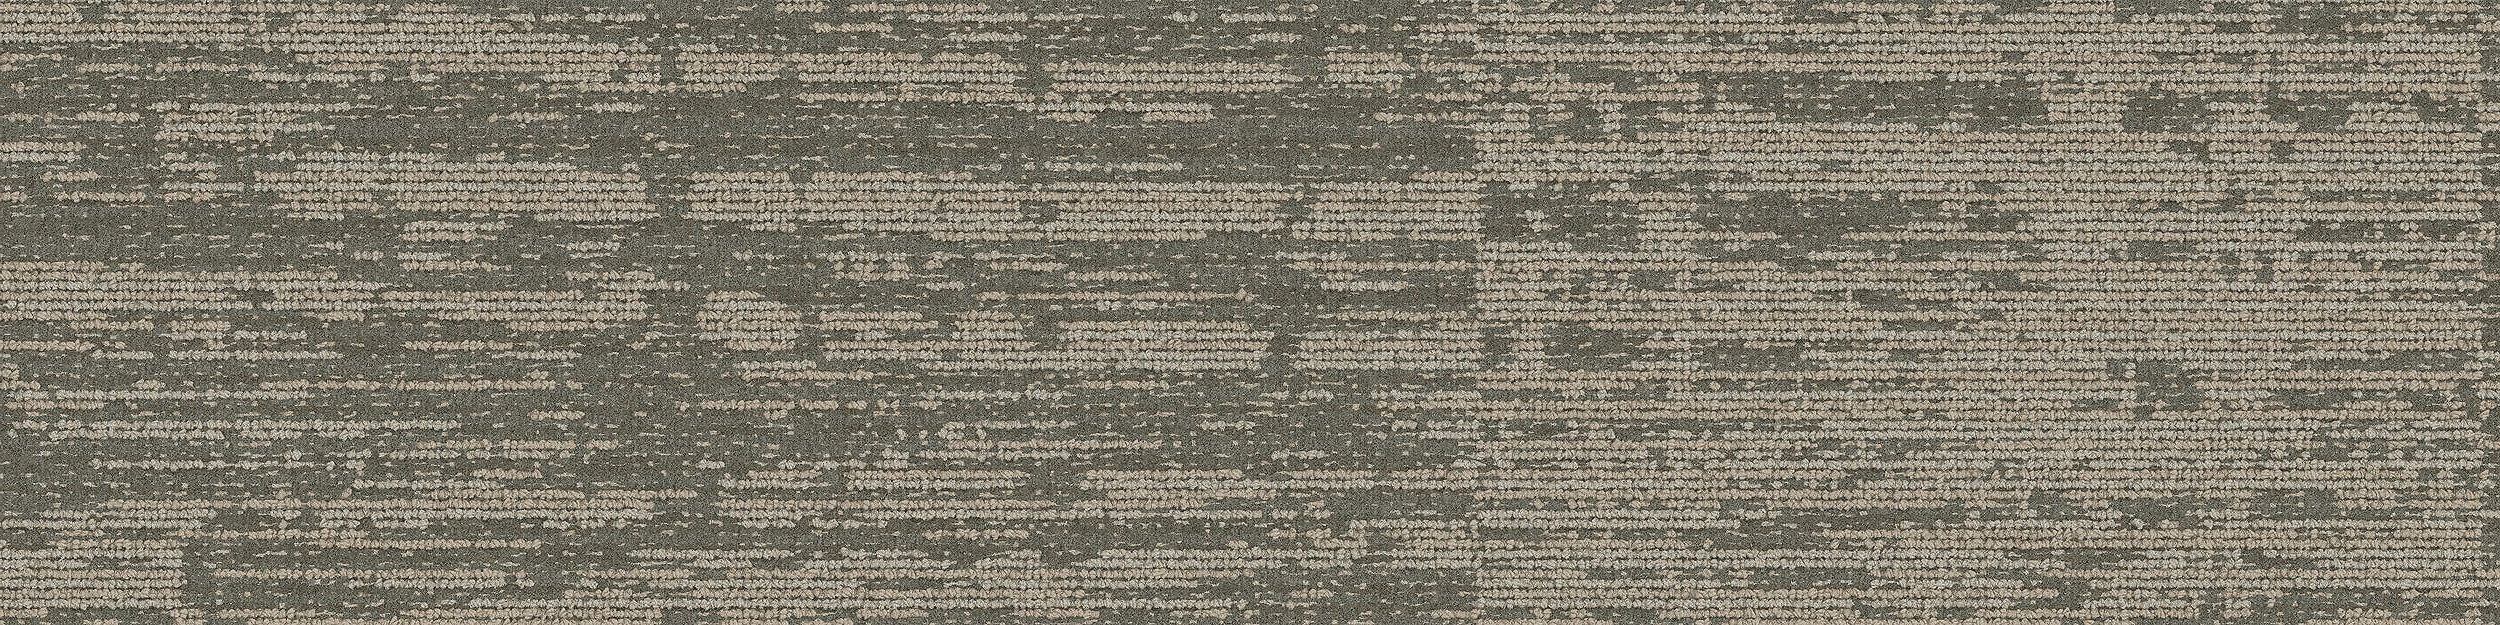 GN159 Carpet Tile In Pewter numéro d’image 2